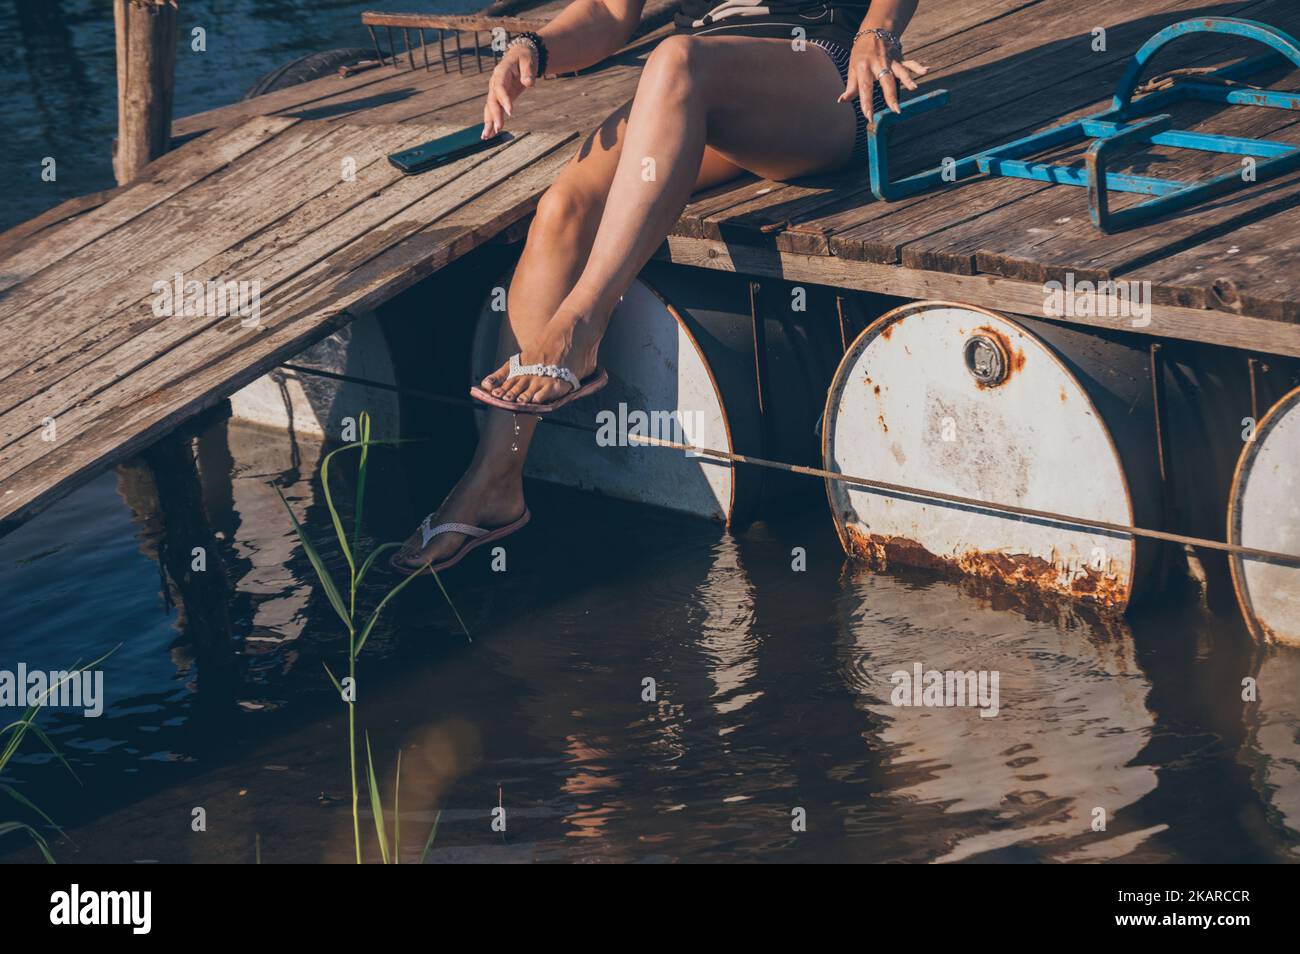 Tanned legs of woman sitting on bridge, washing feet in river water Stock Photo